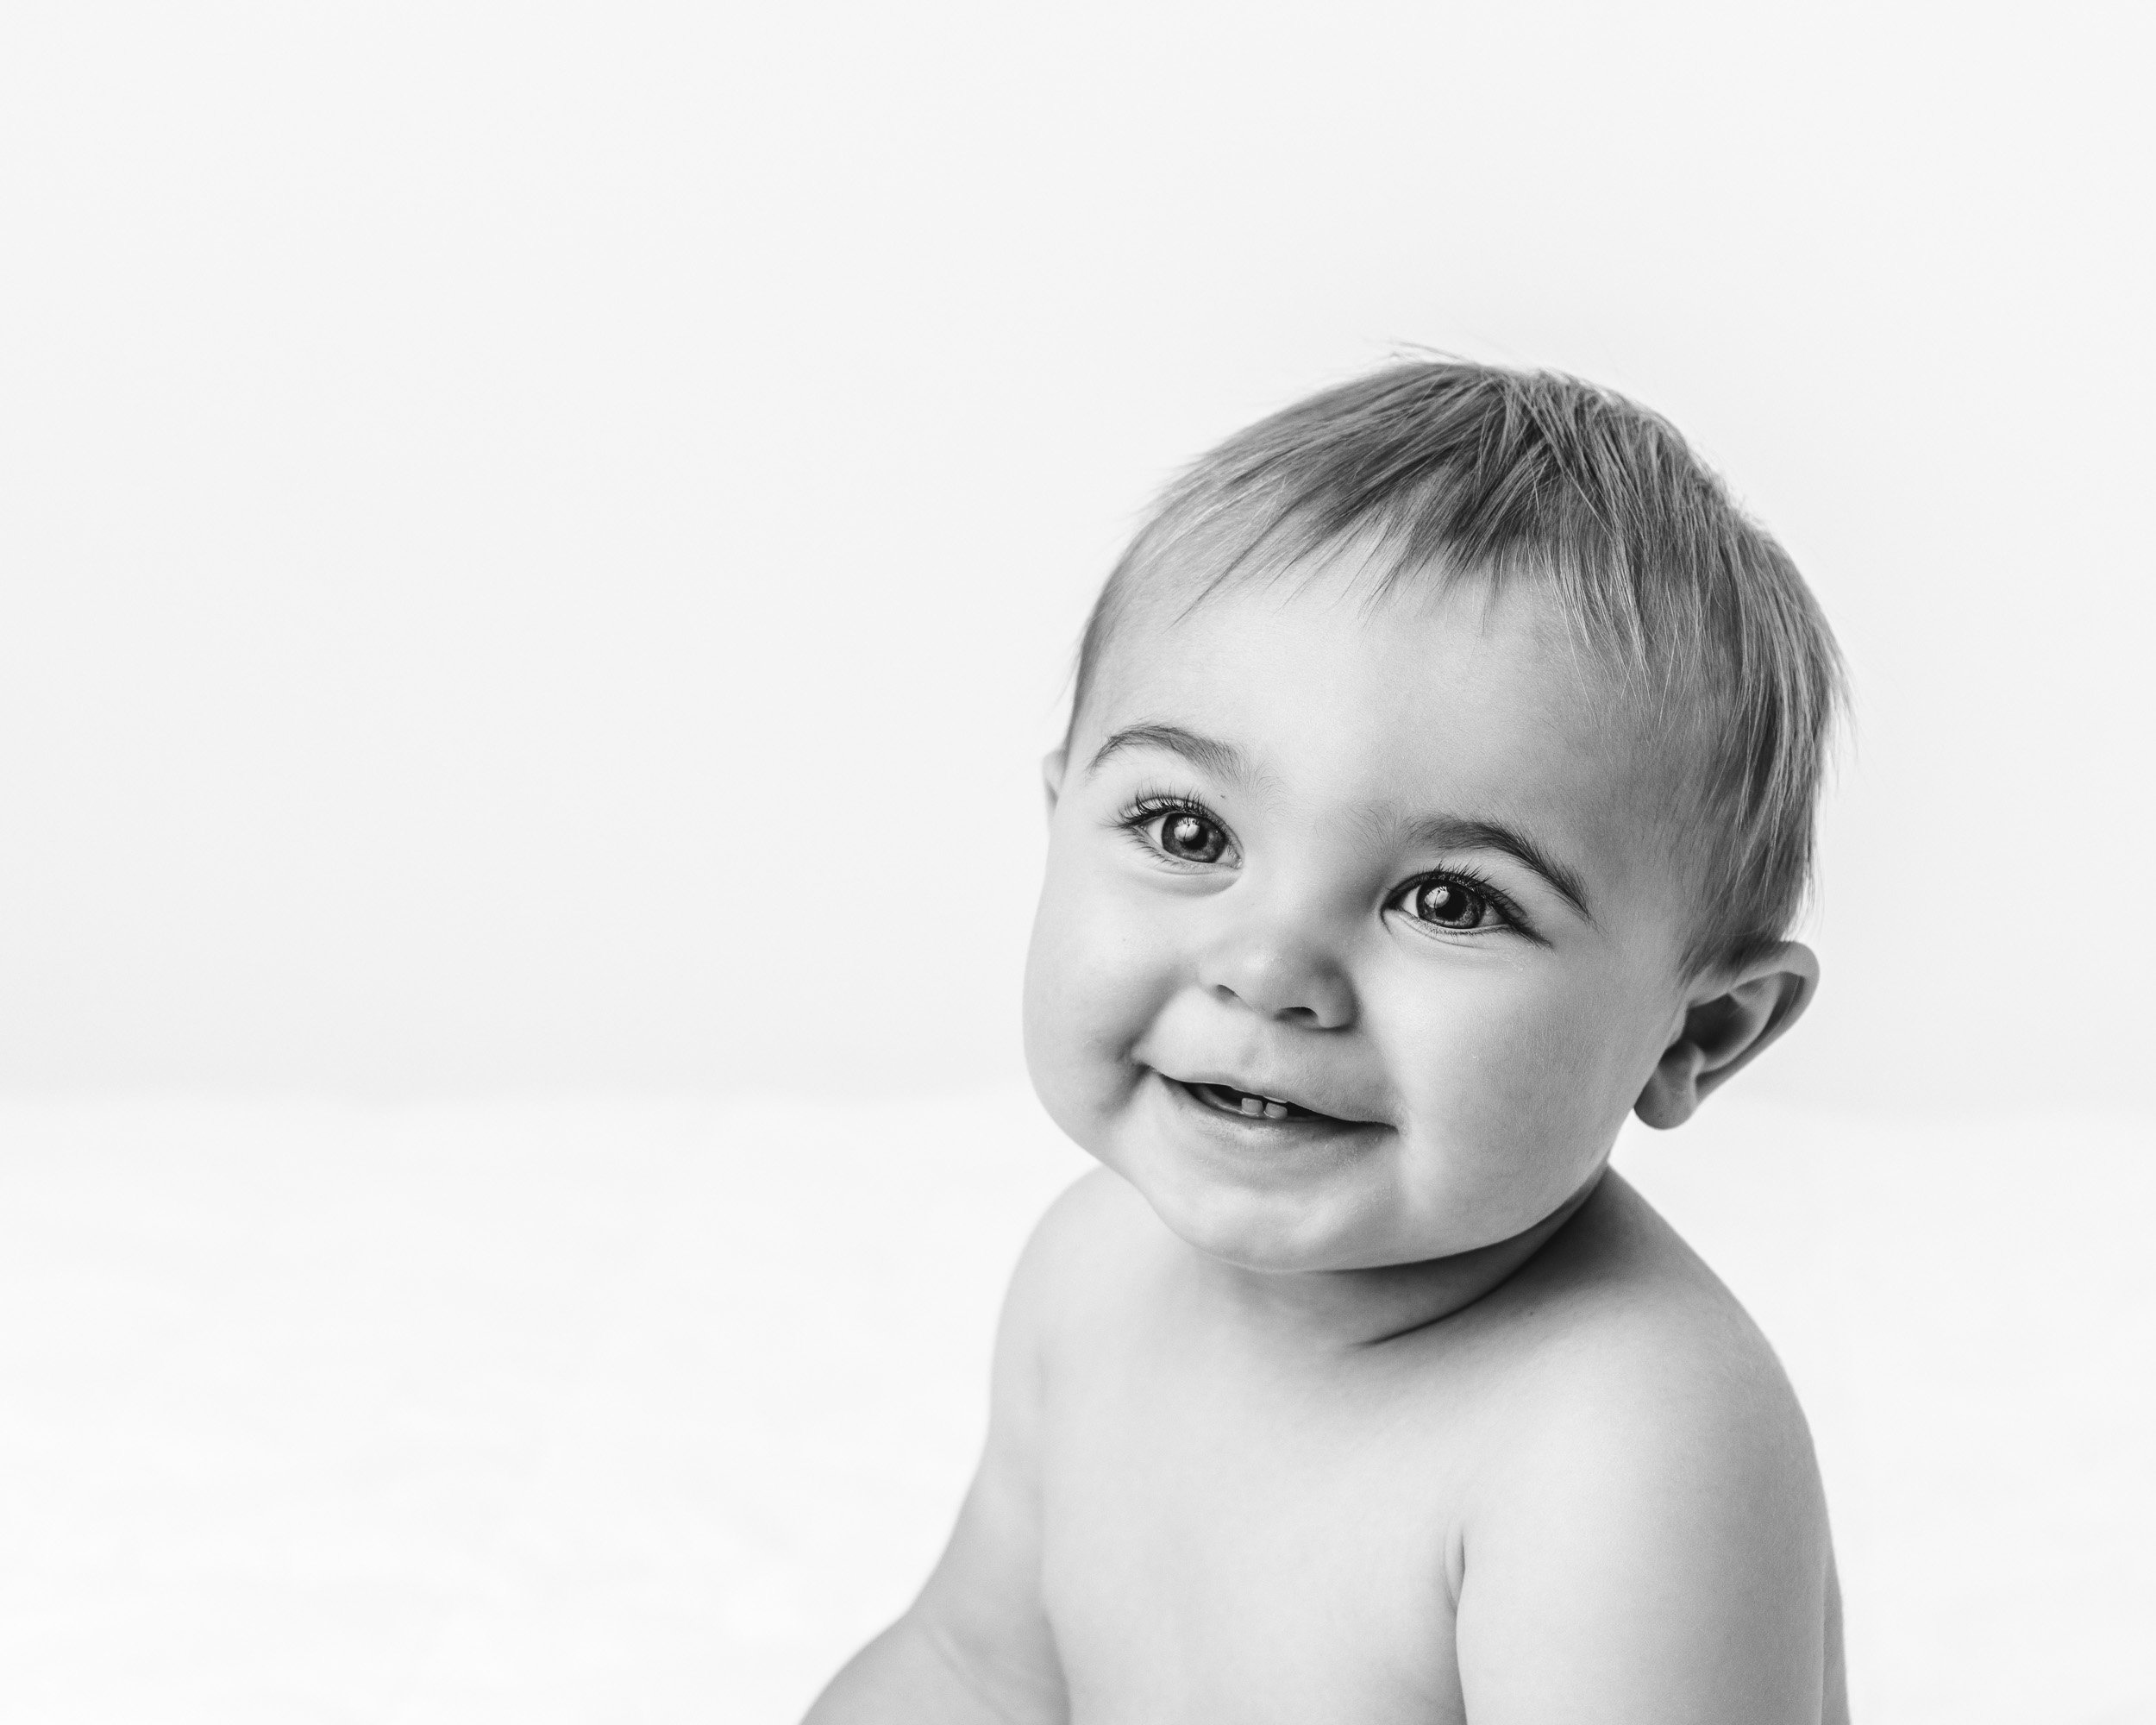  A portrait of a shirtless baby boy in a studio by Nicole Hawkins Photography. baby face portraits near New York #NicoleHawkinsPhotography #NicoleHawkinsBabies #BirthdayStudioPhotography #smashcake #firstbirthday #studiobabiesandchildren 